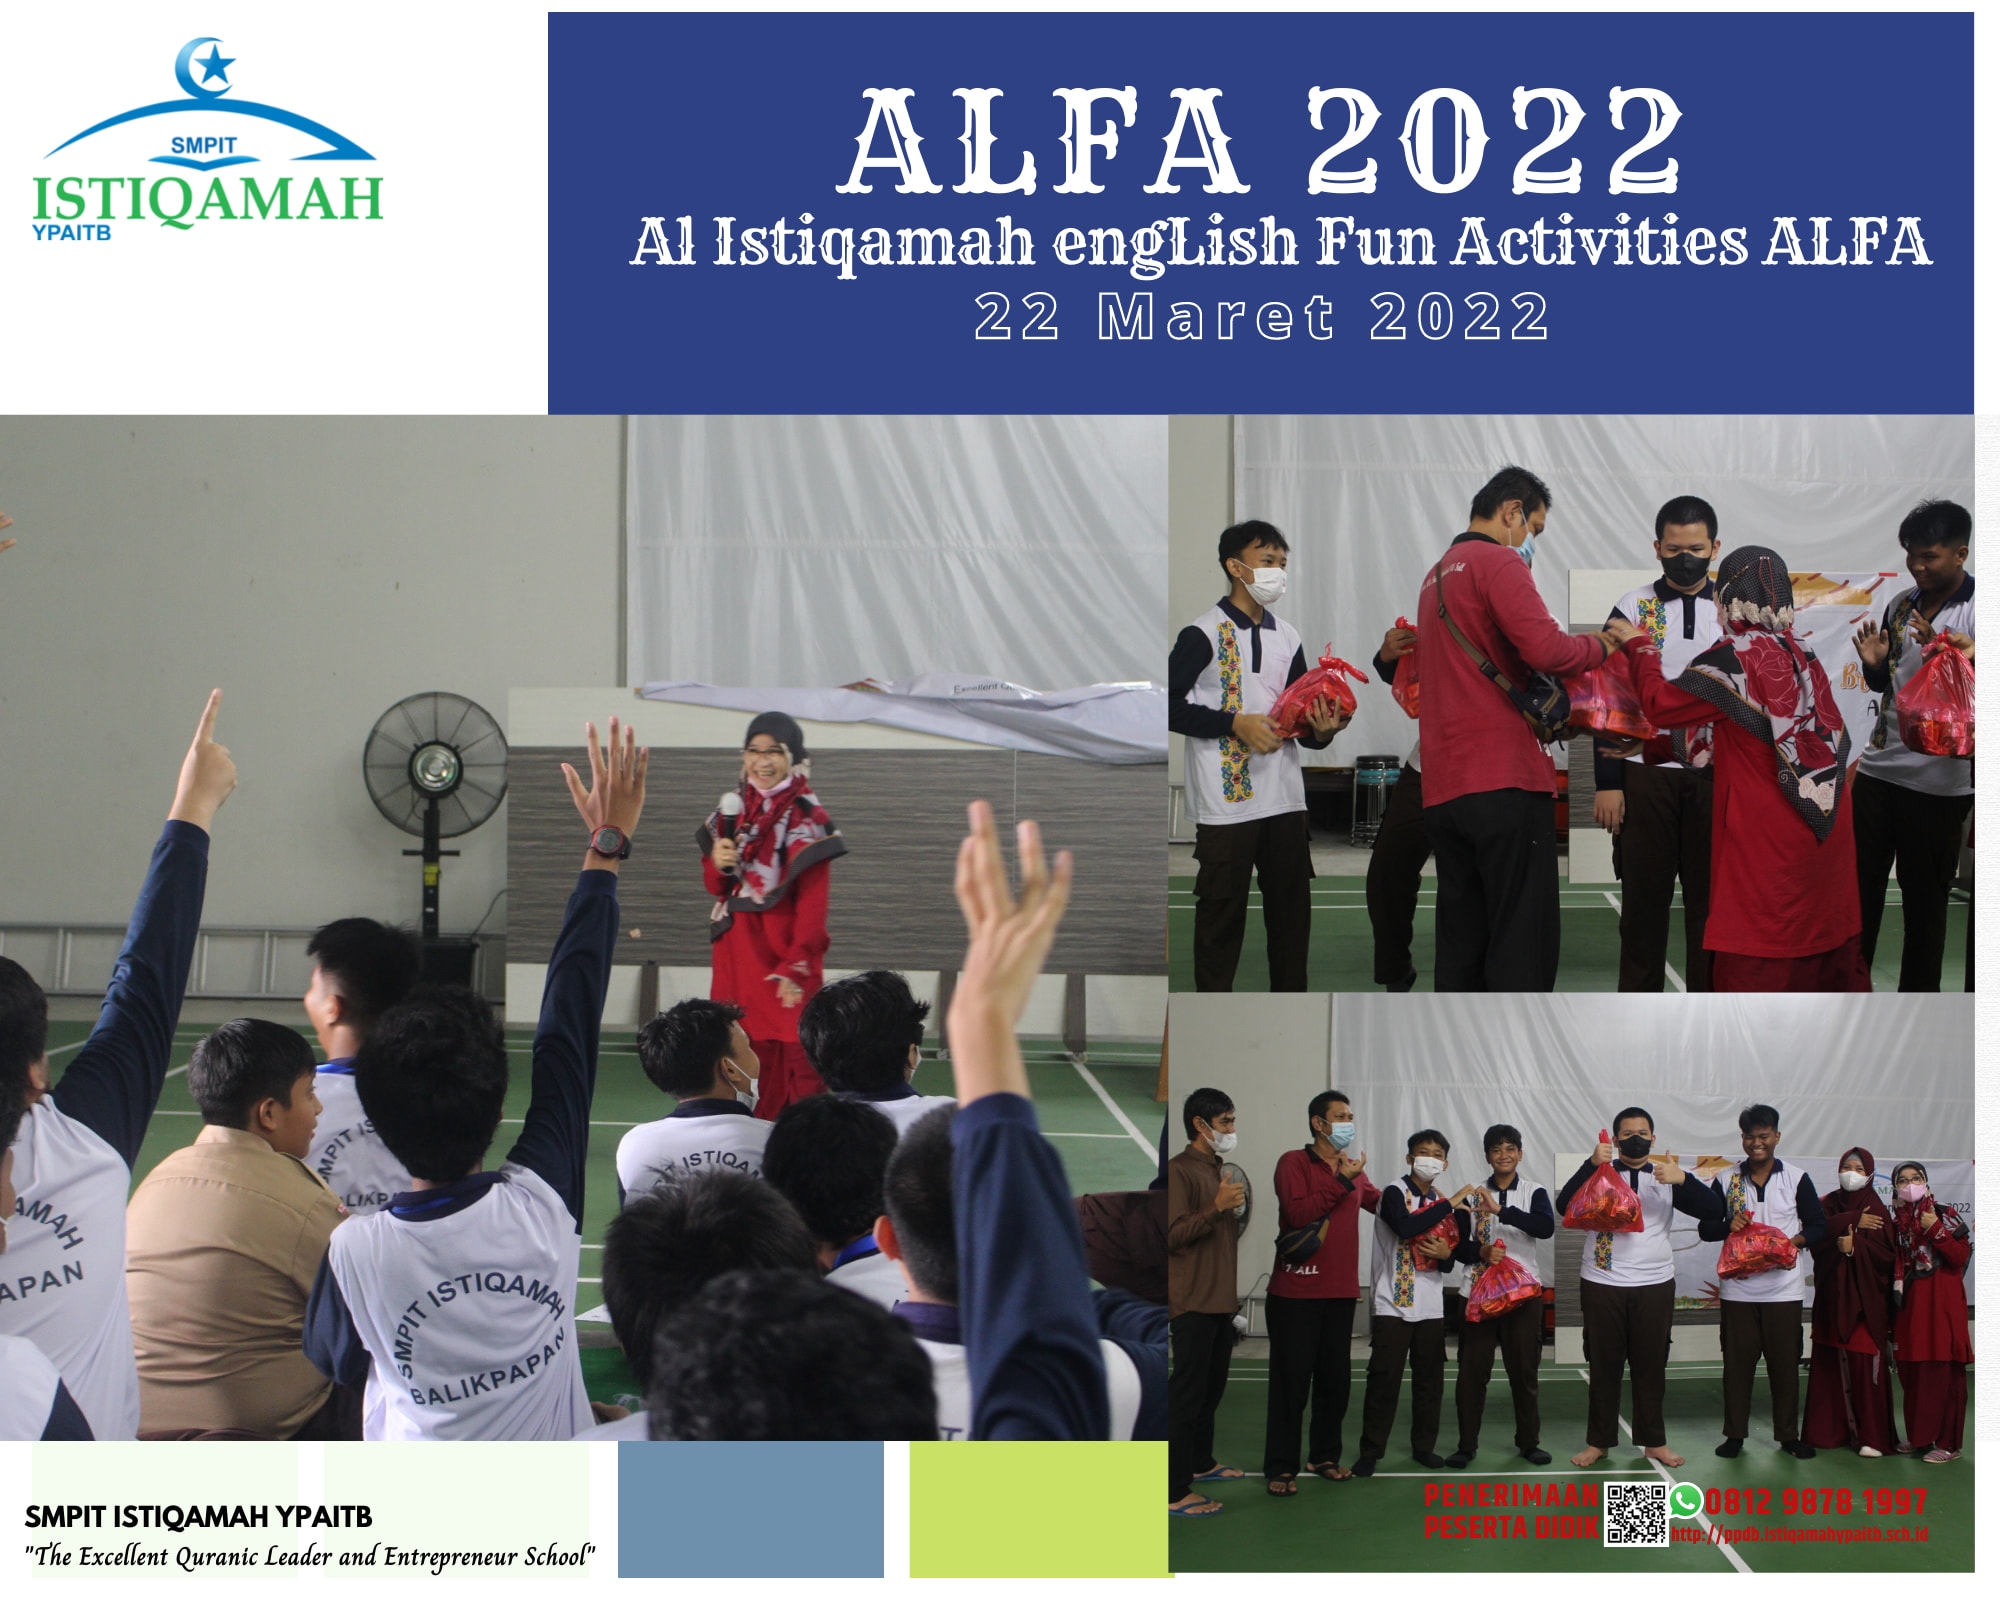 Al Istiqamah engLish Fun Activities (ALFA) 2022